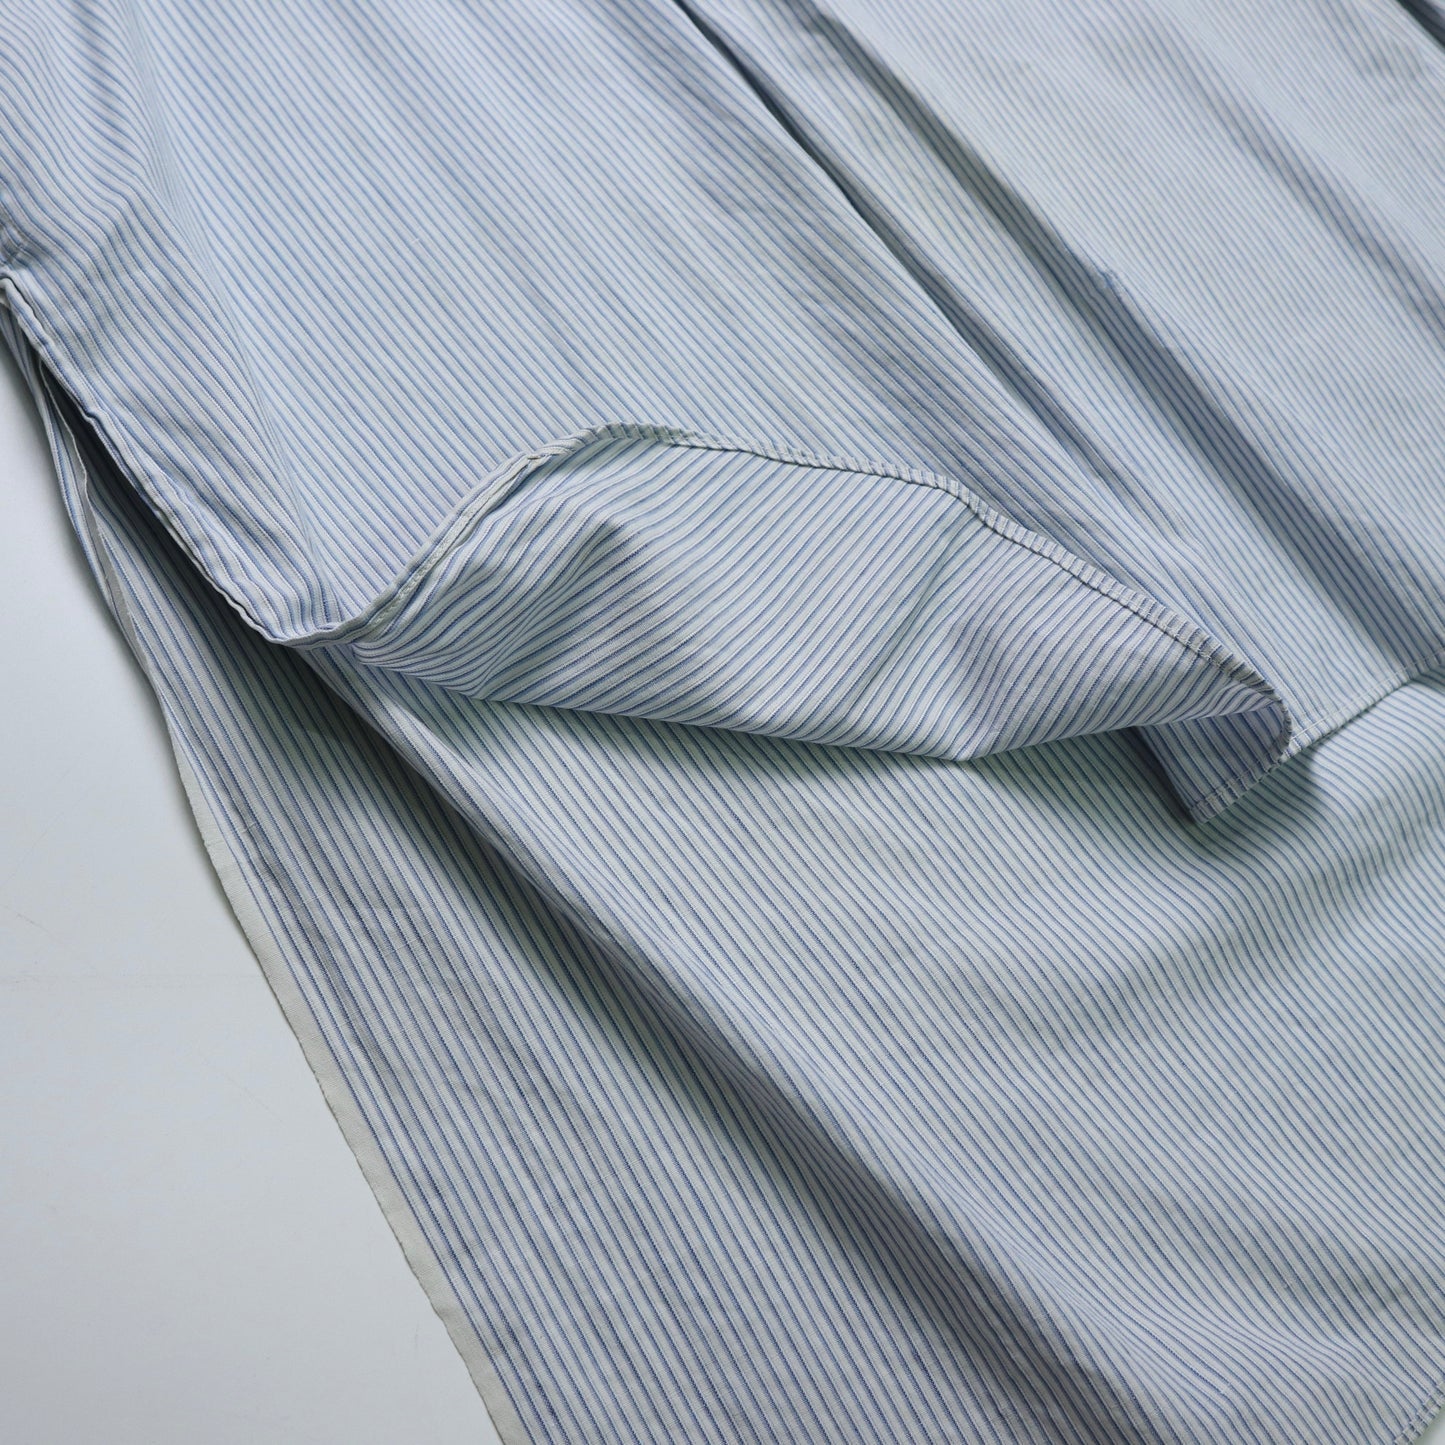 1940s 法國藍白條紋工作襯衫